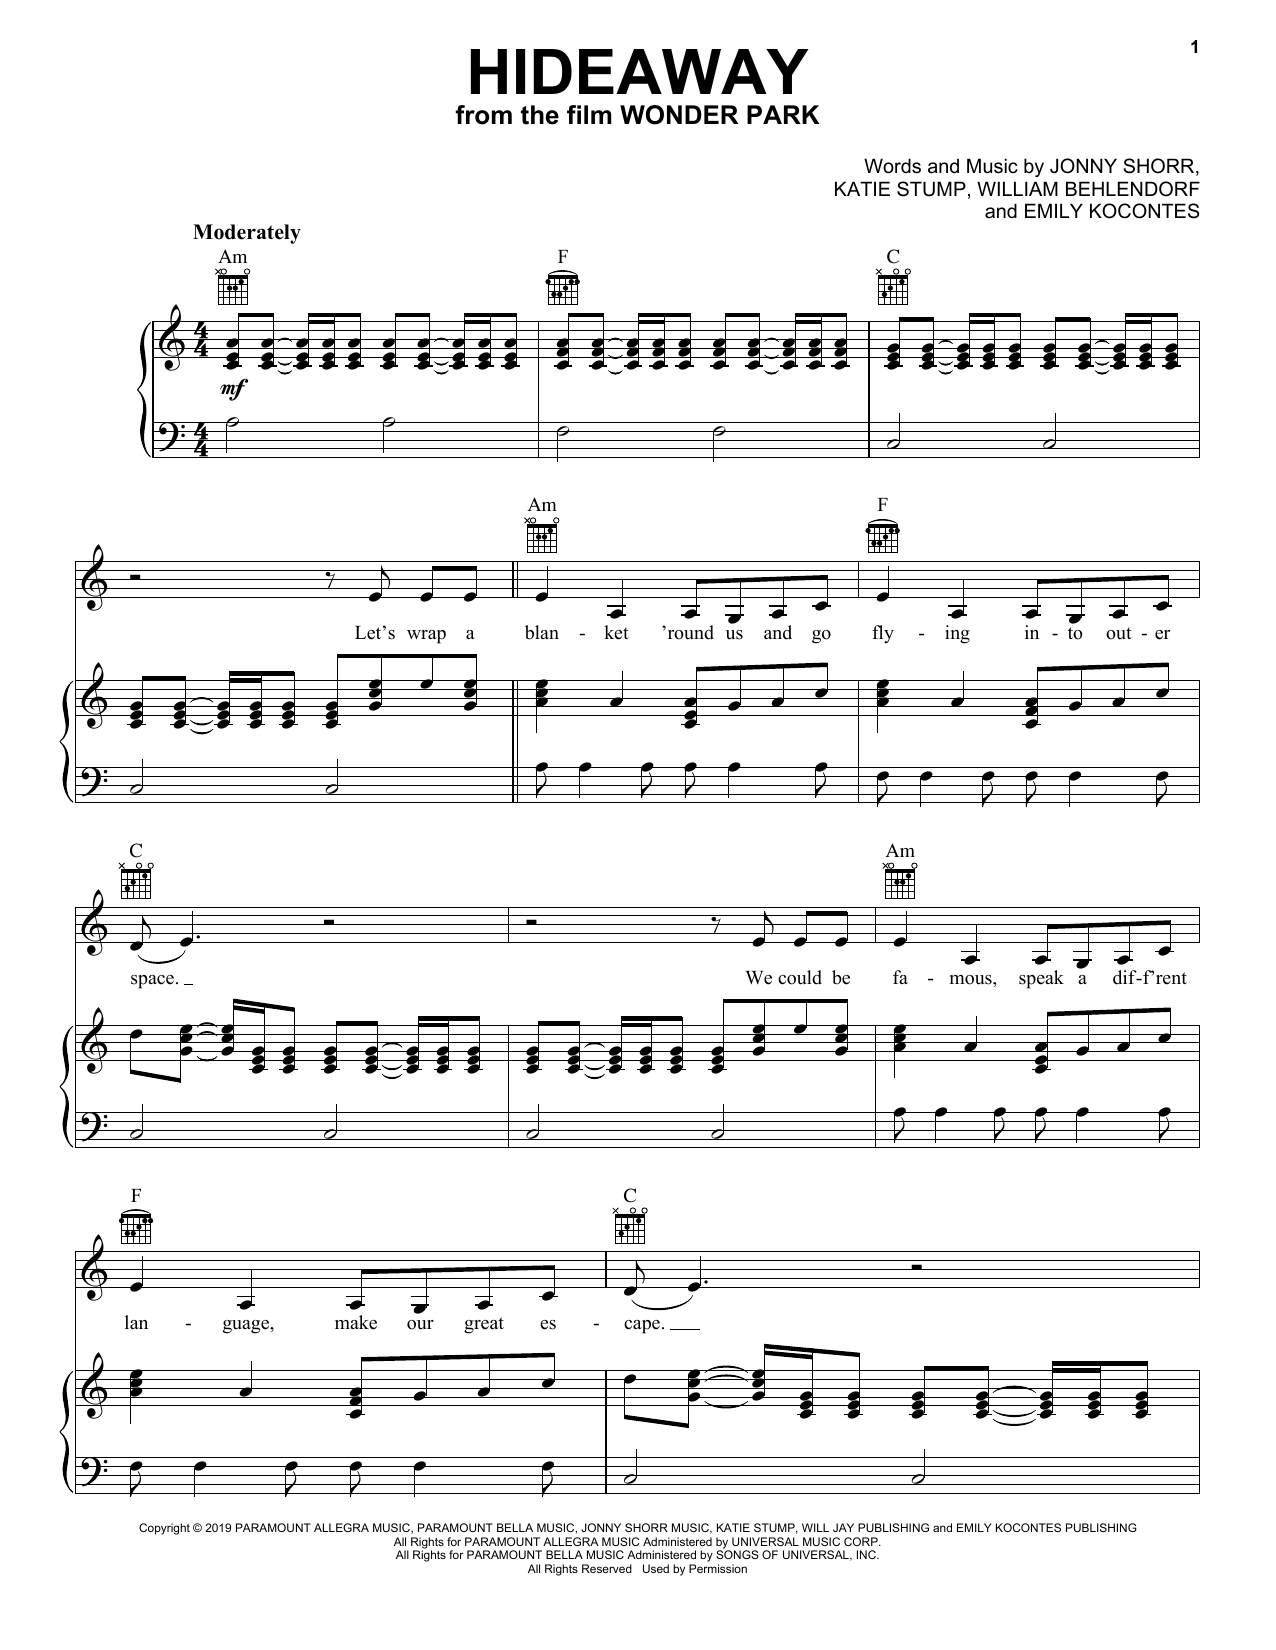 Grace VanderWaal Hideaway (from Wonder Park) Sheet Music Notes & Chords for Easy Piano - Download or Print PDF